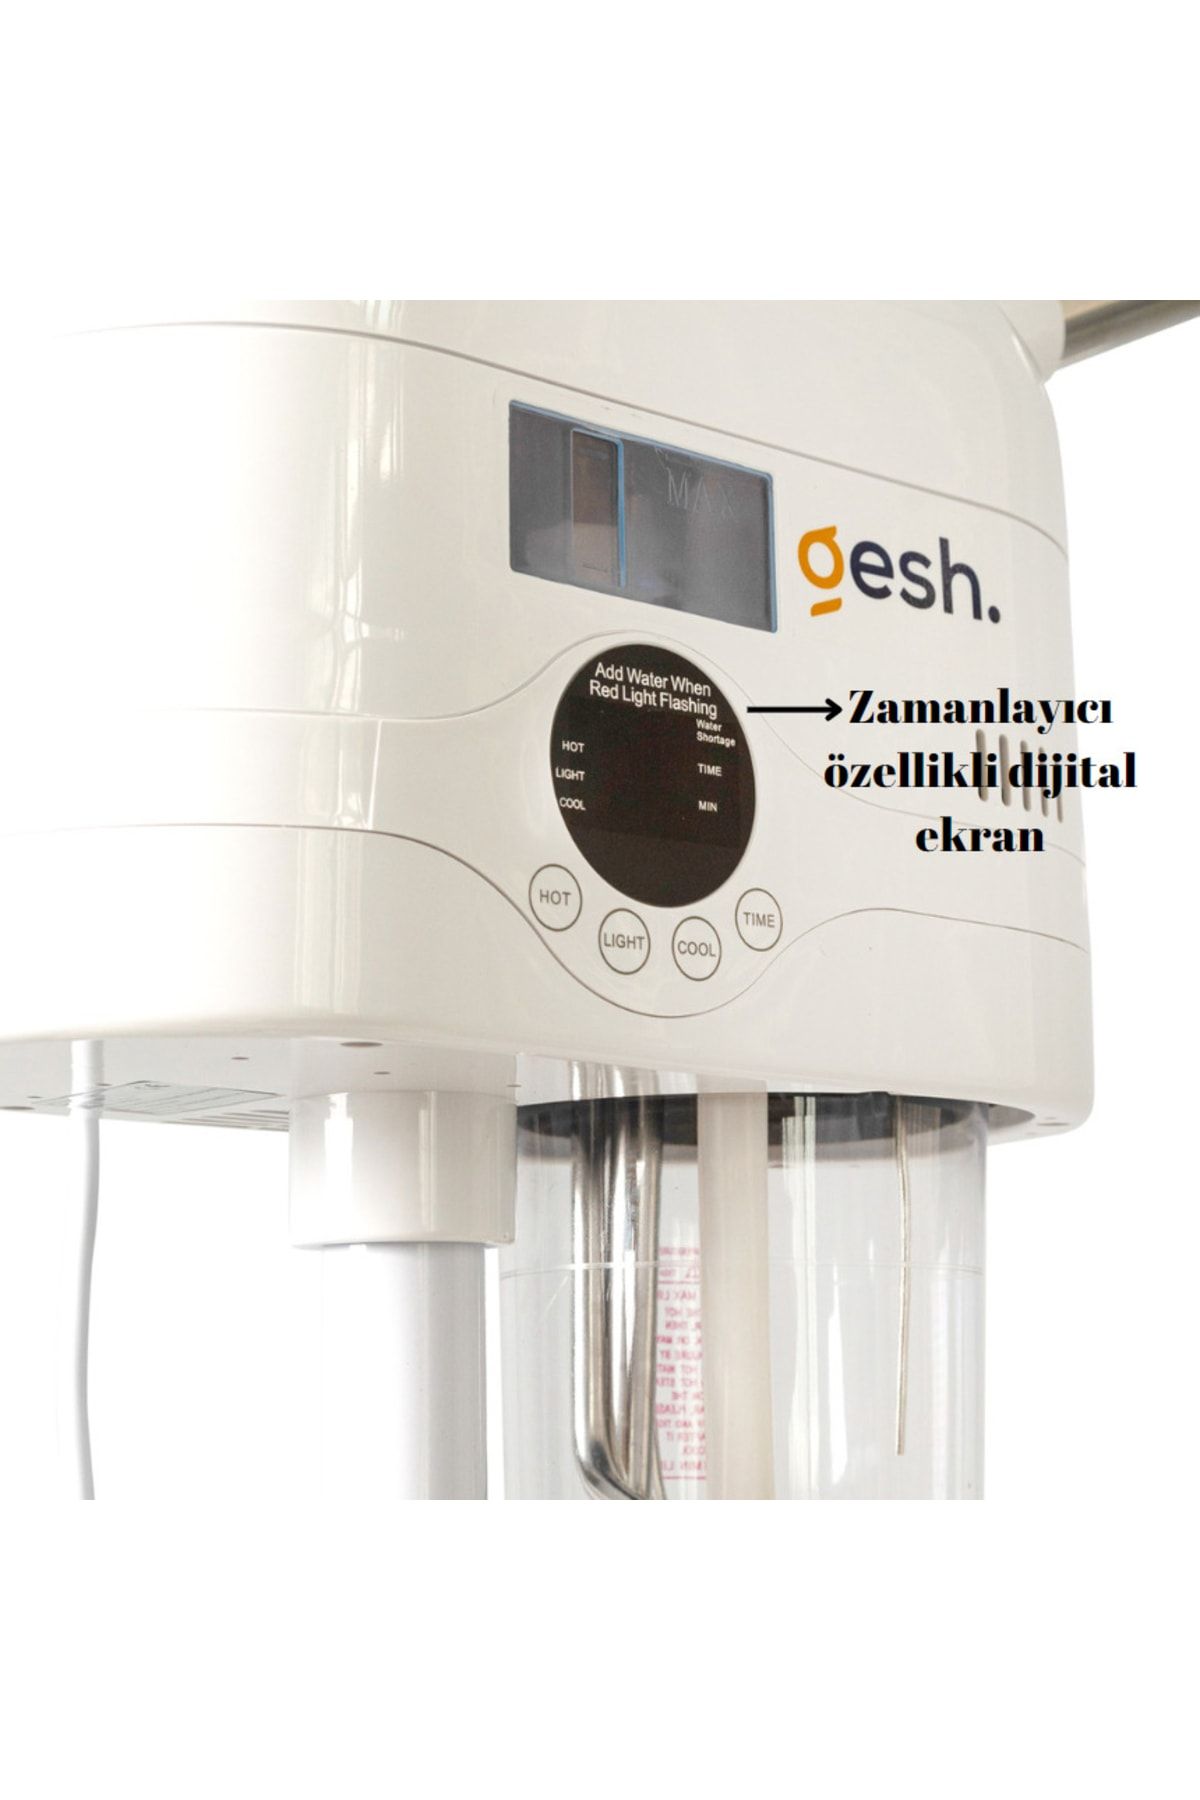 Gesh دستگاه بخارساز پوست حرفه ای با اوزون و بخار سرد و گرم GESH